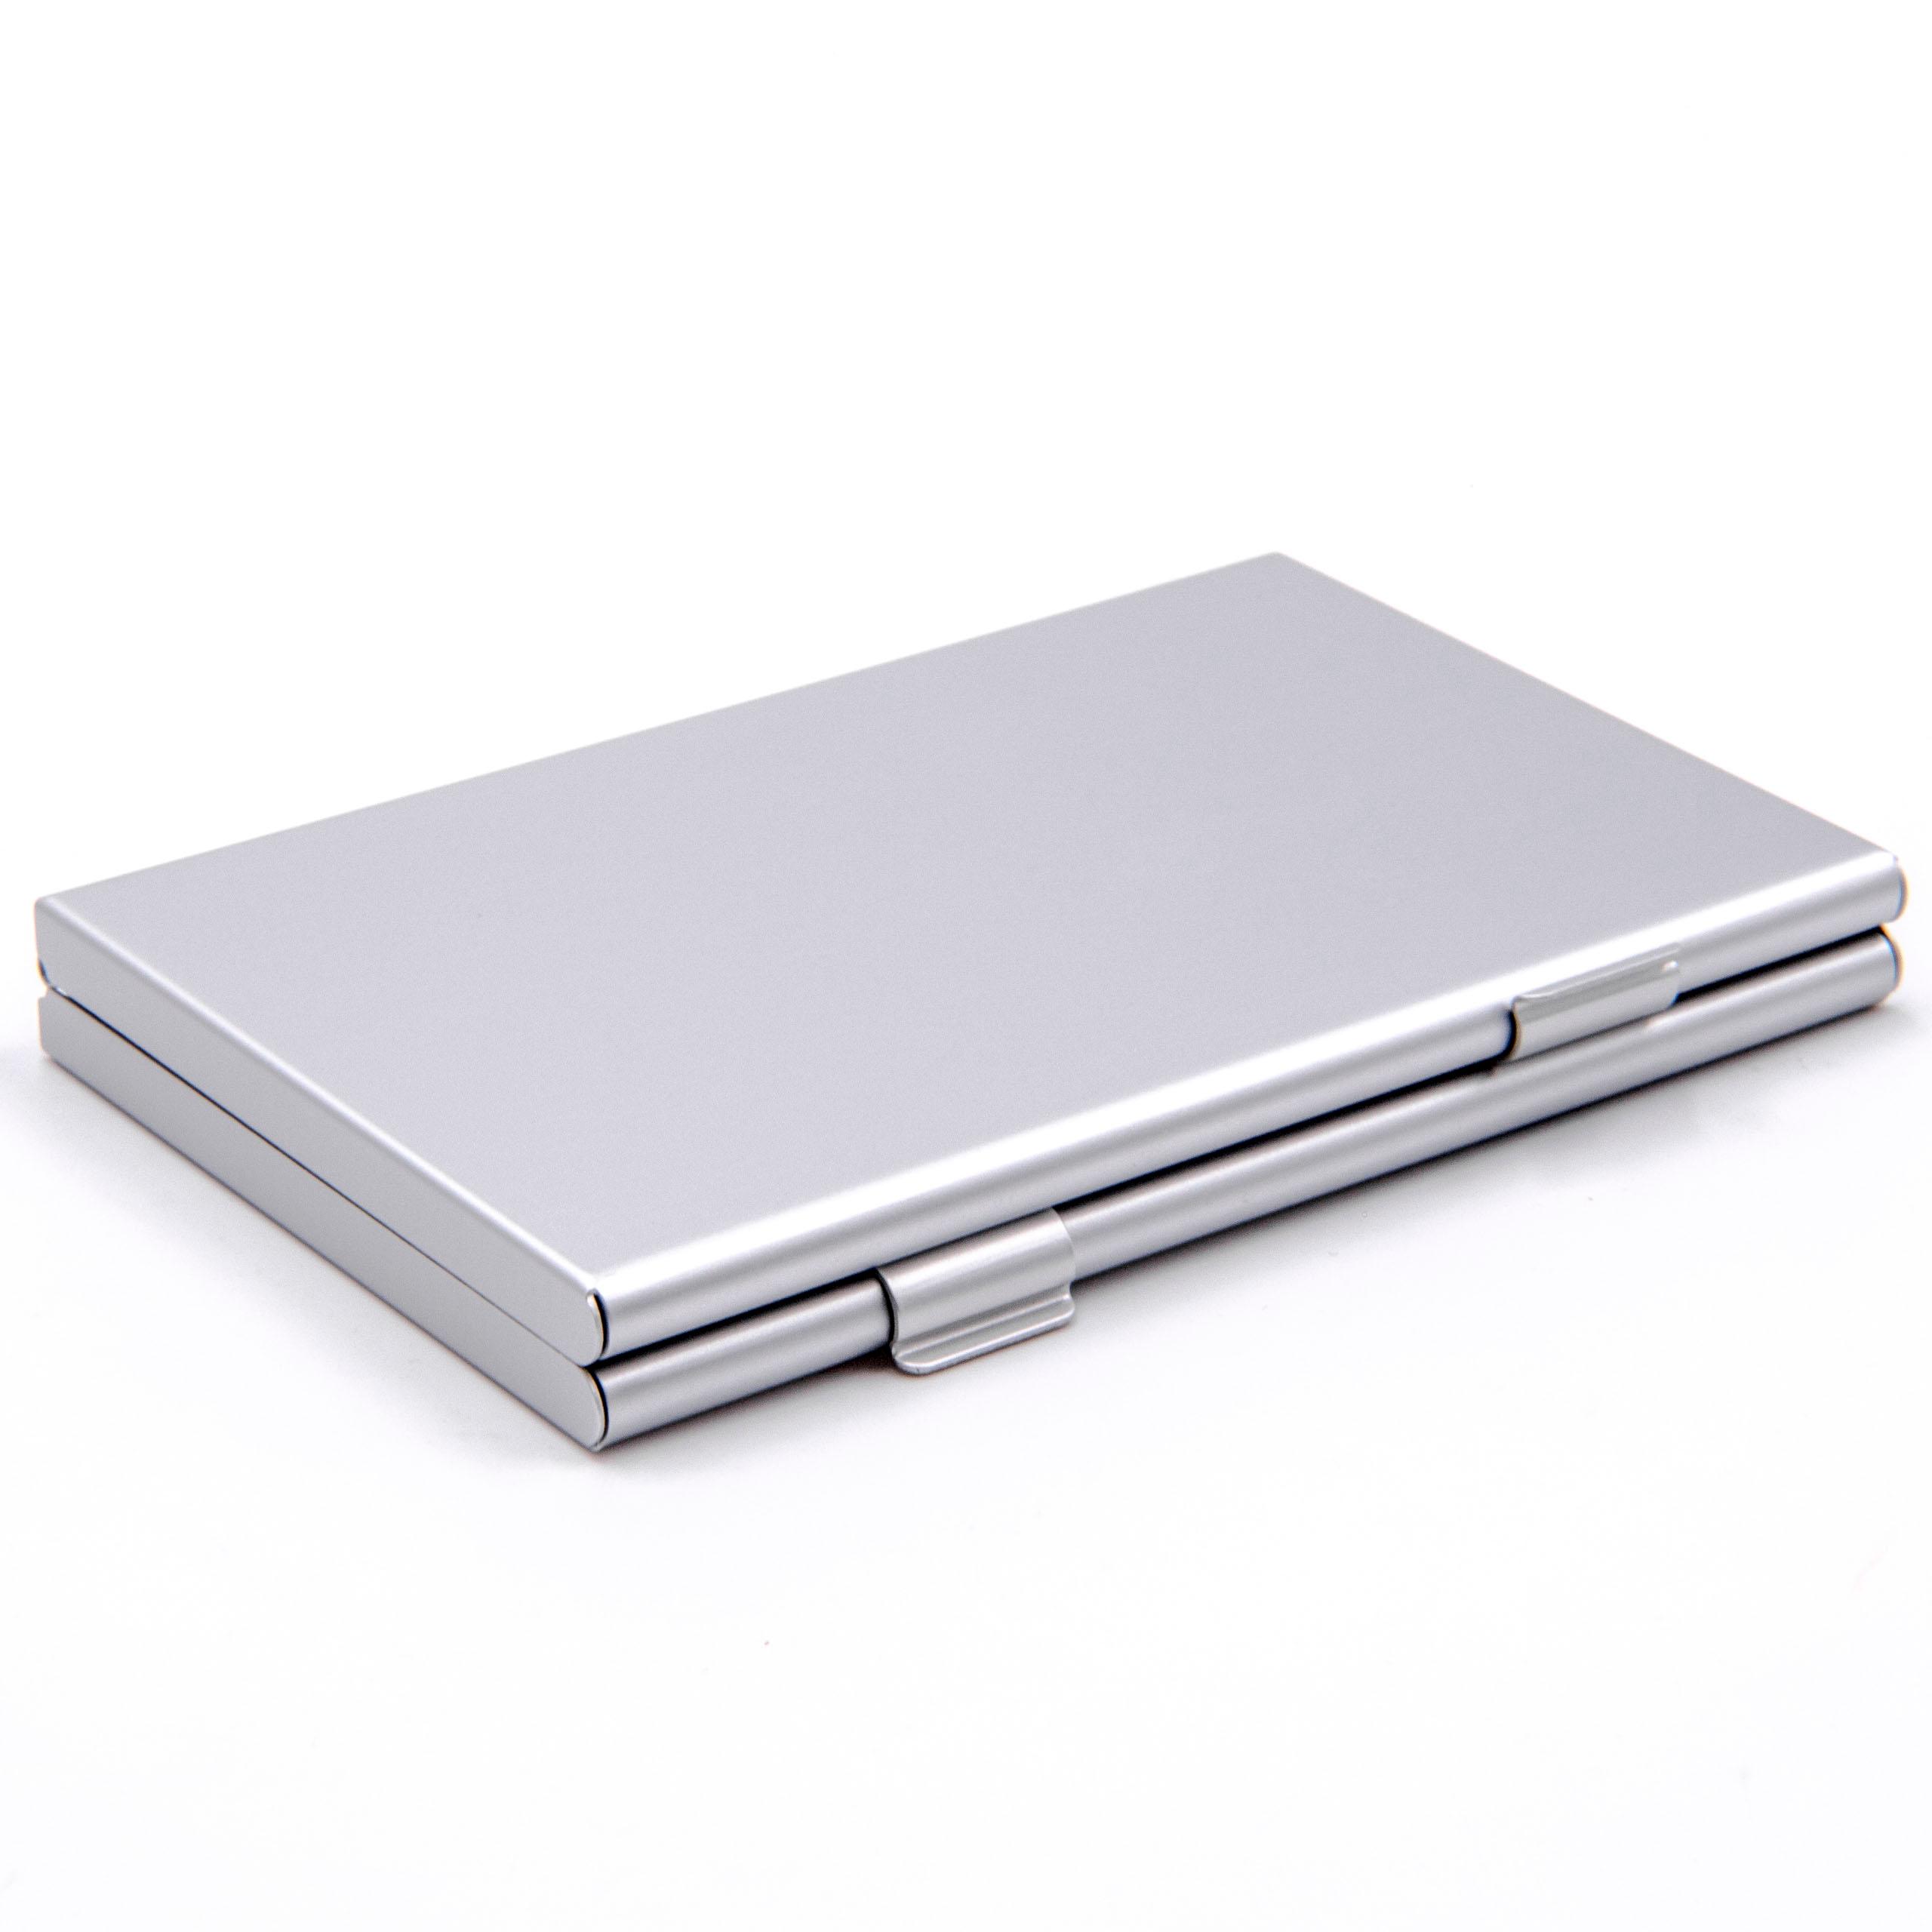 Carrying Case suitable for SIM cards 8x microSIM - aluminium, silver